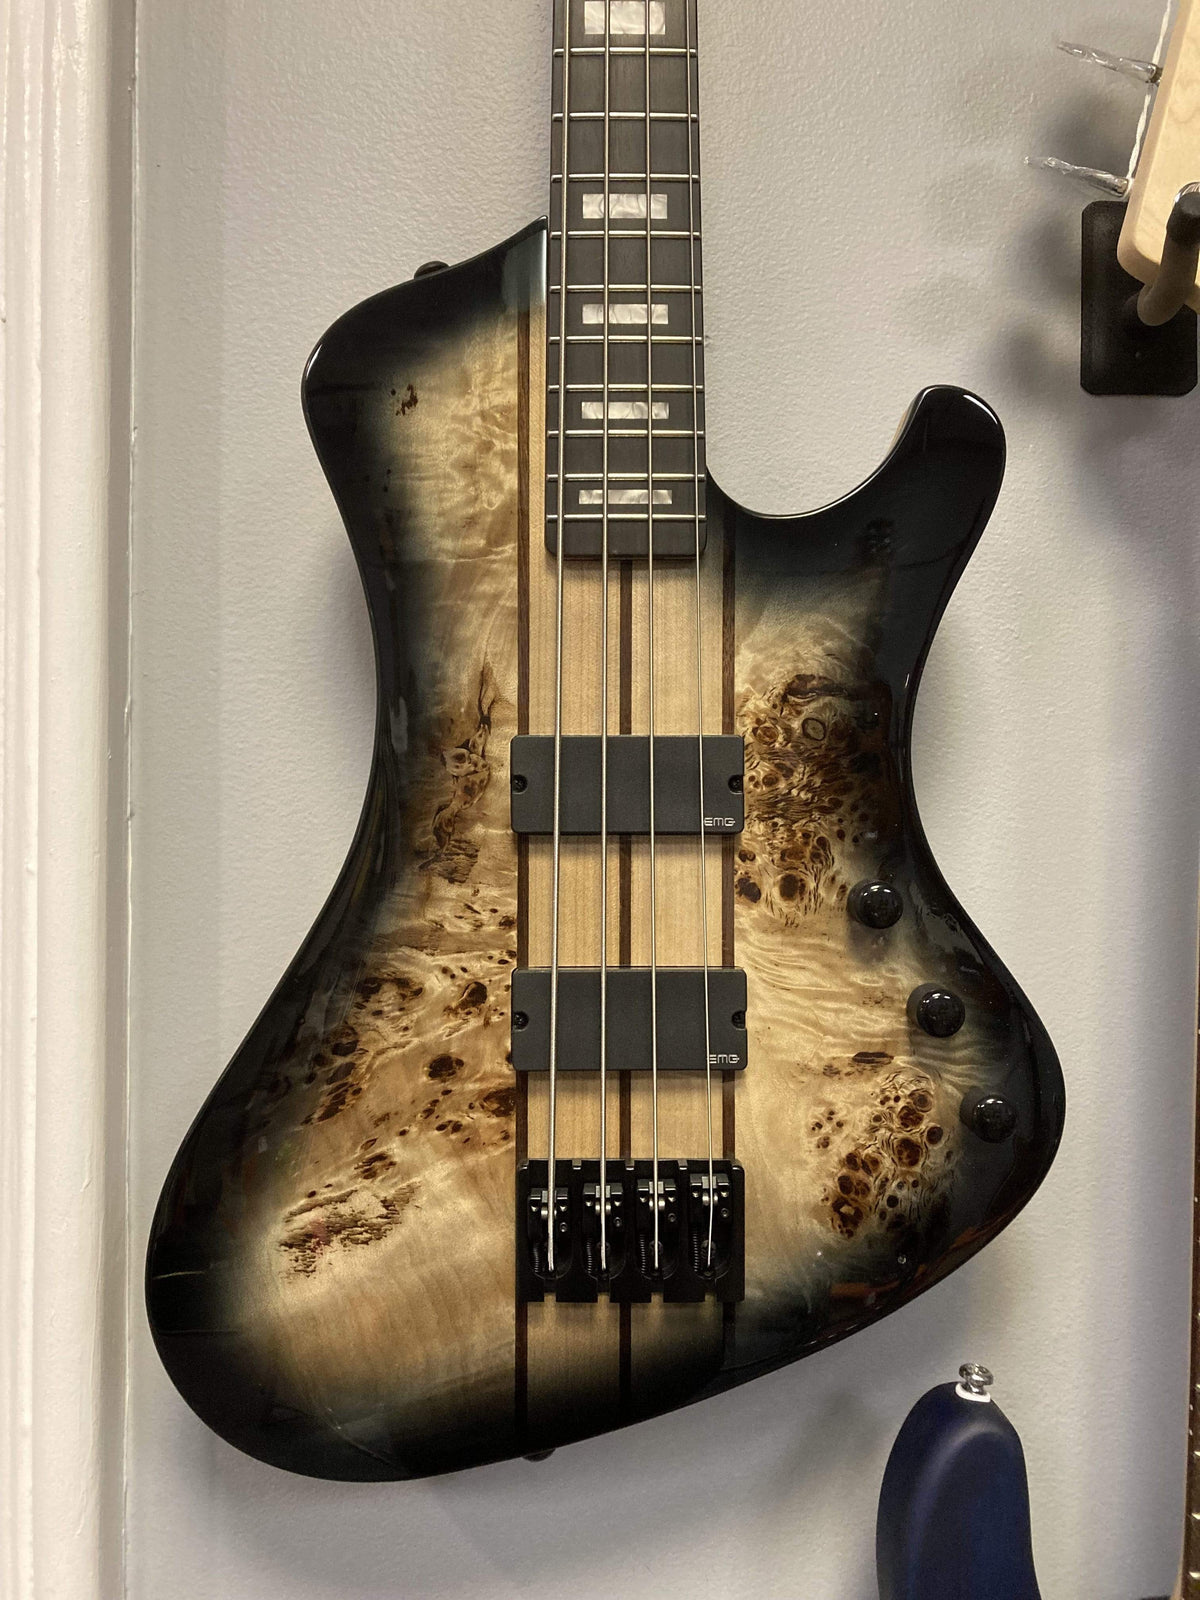 ESP LTD Stream-1004 Bass Guitar - Black Natural Burst...